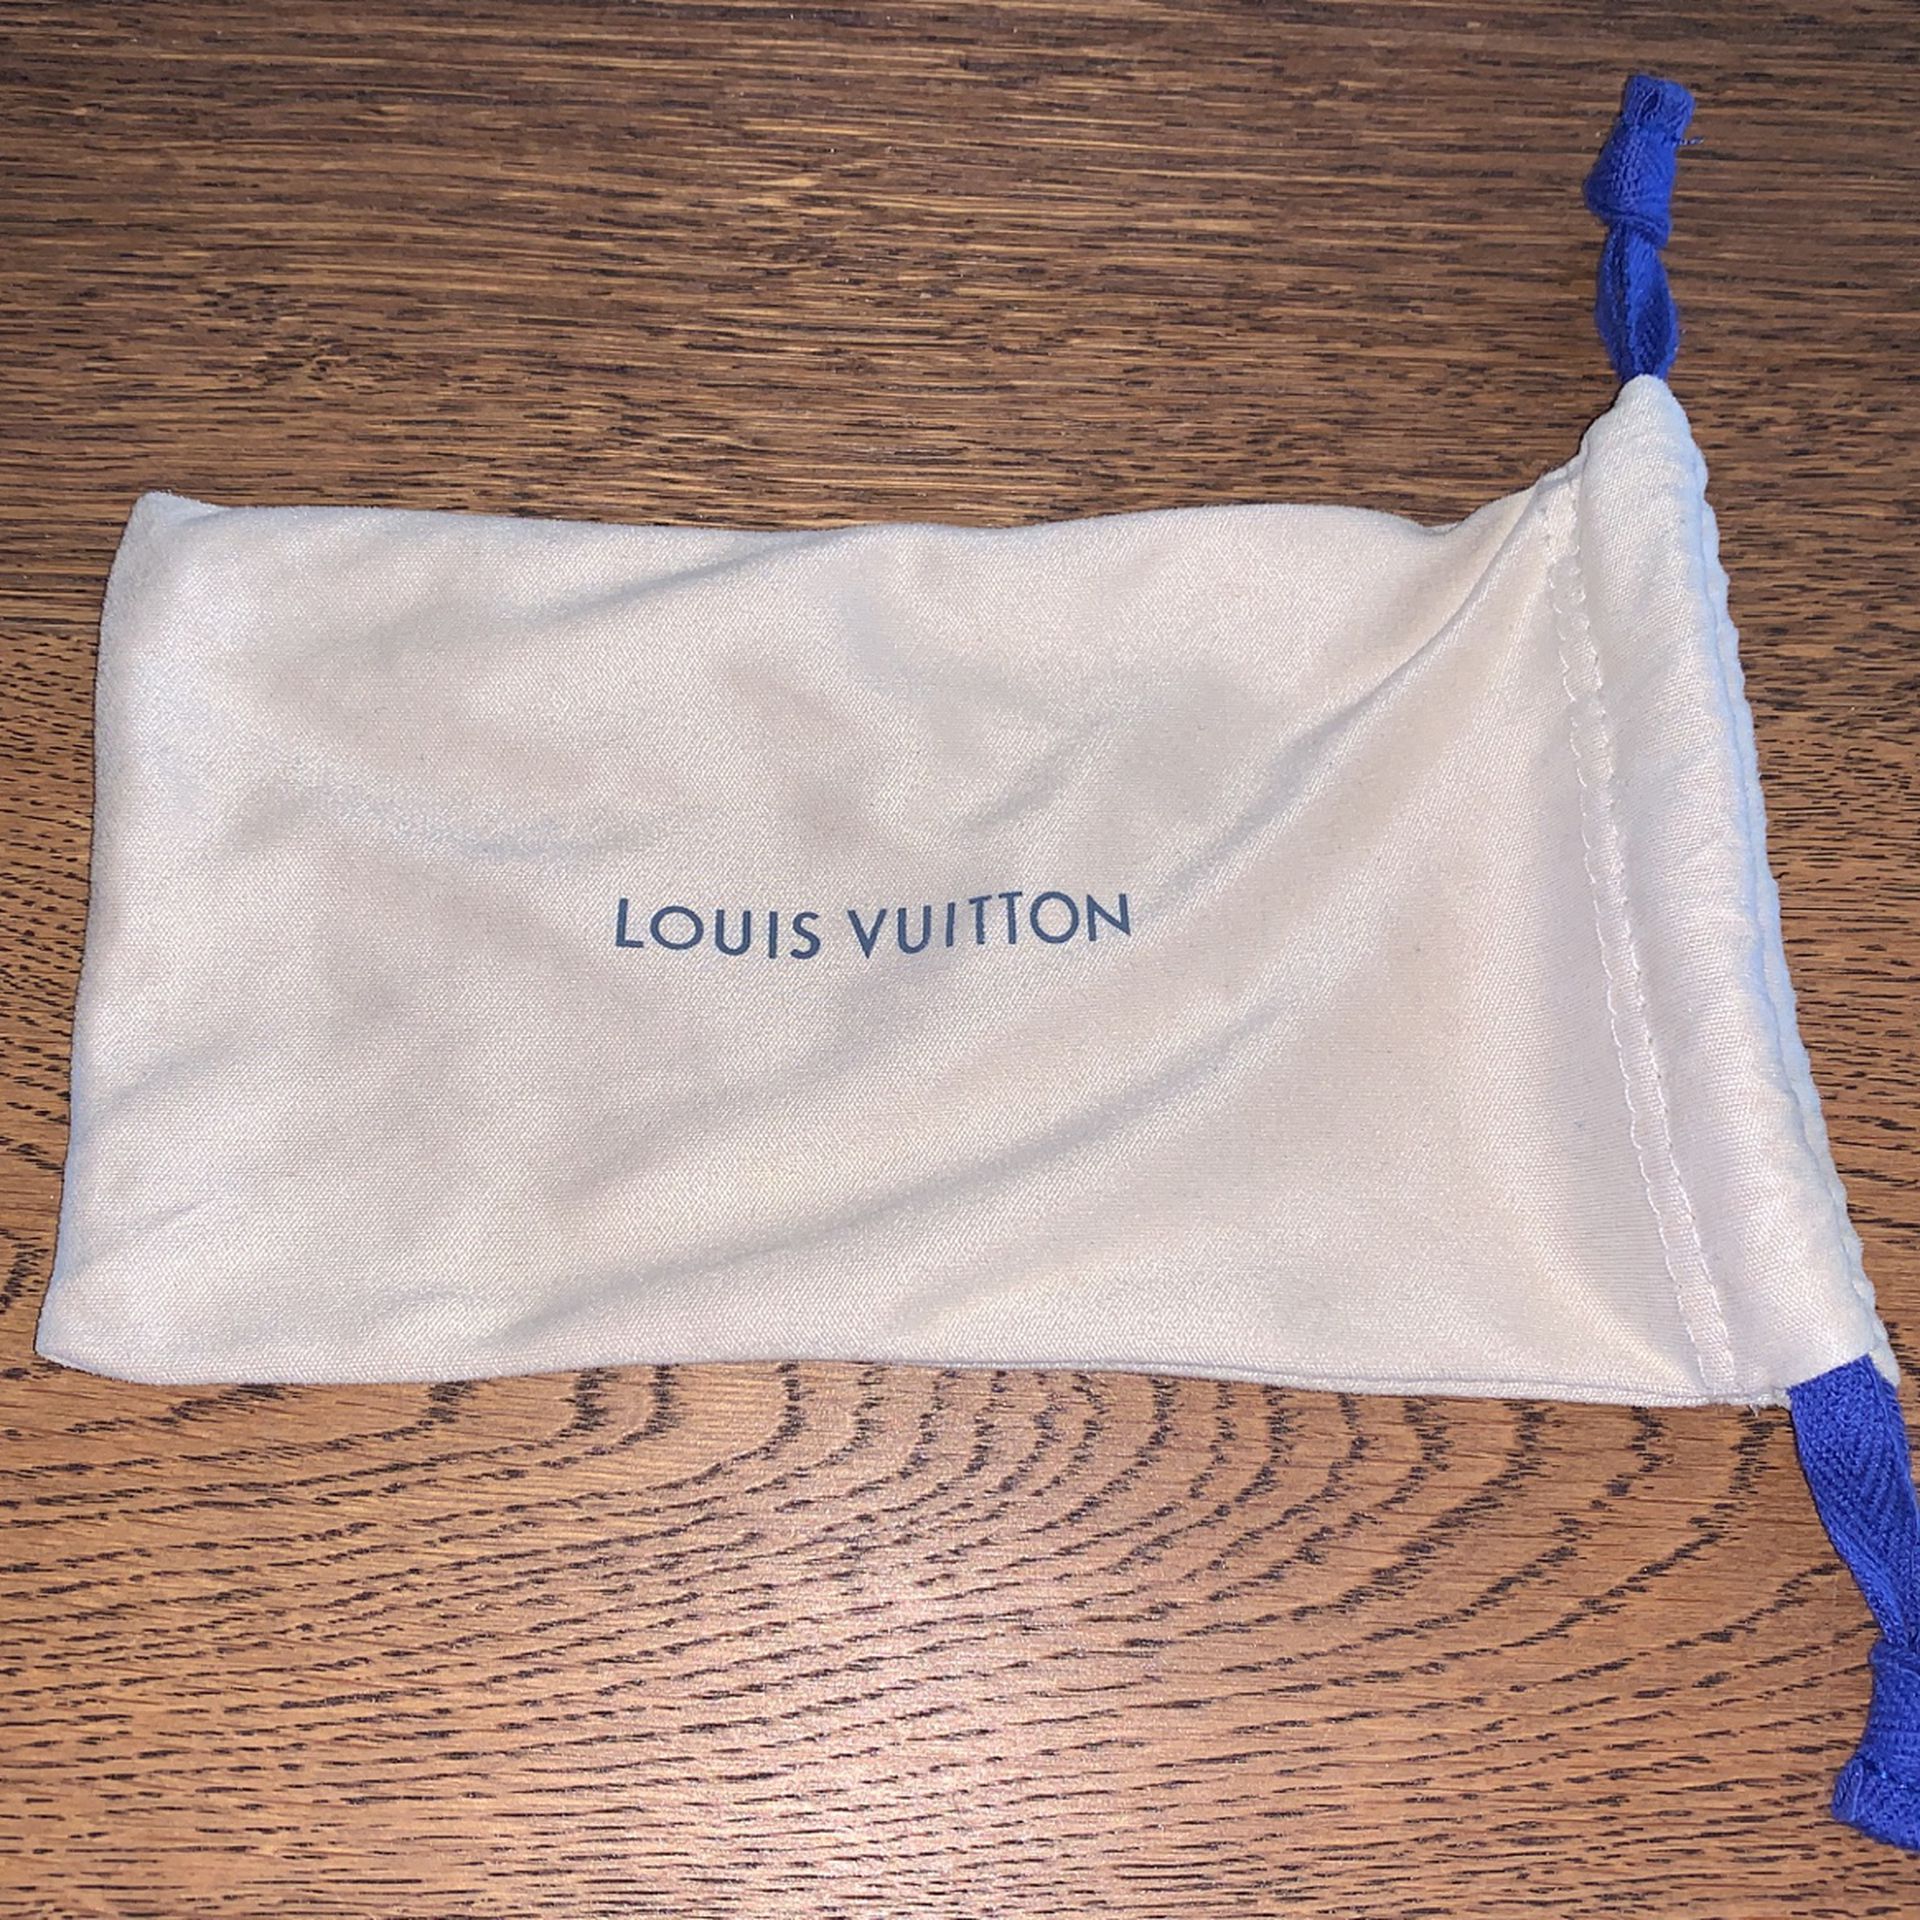 Louis Vuitton LA GRANDE BELLEZZA SUNGLASSES for Sale in Chandler